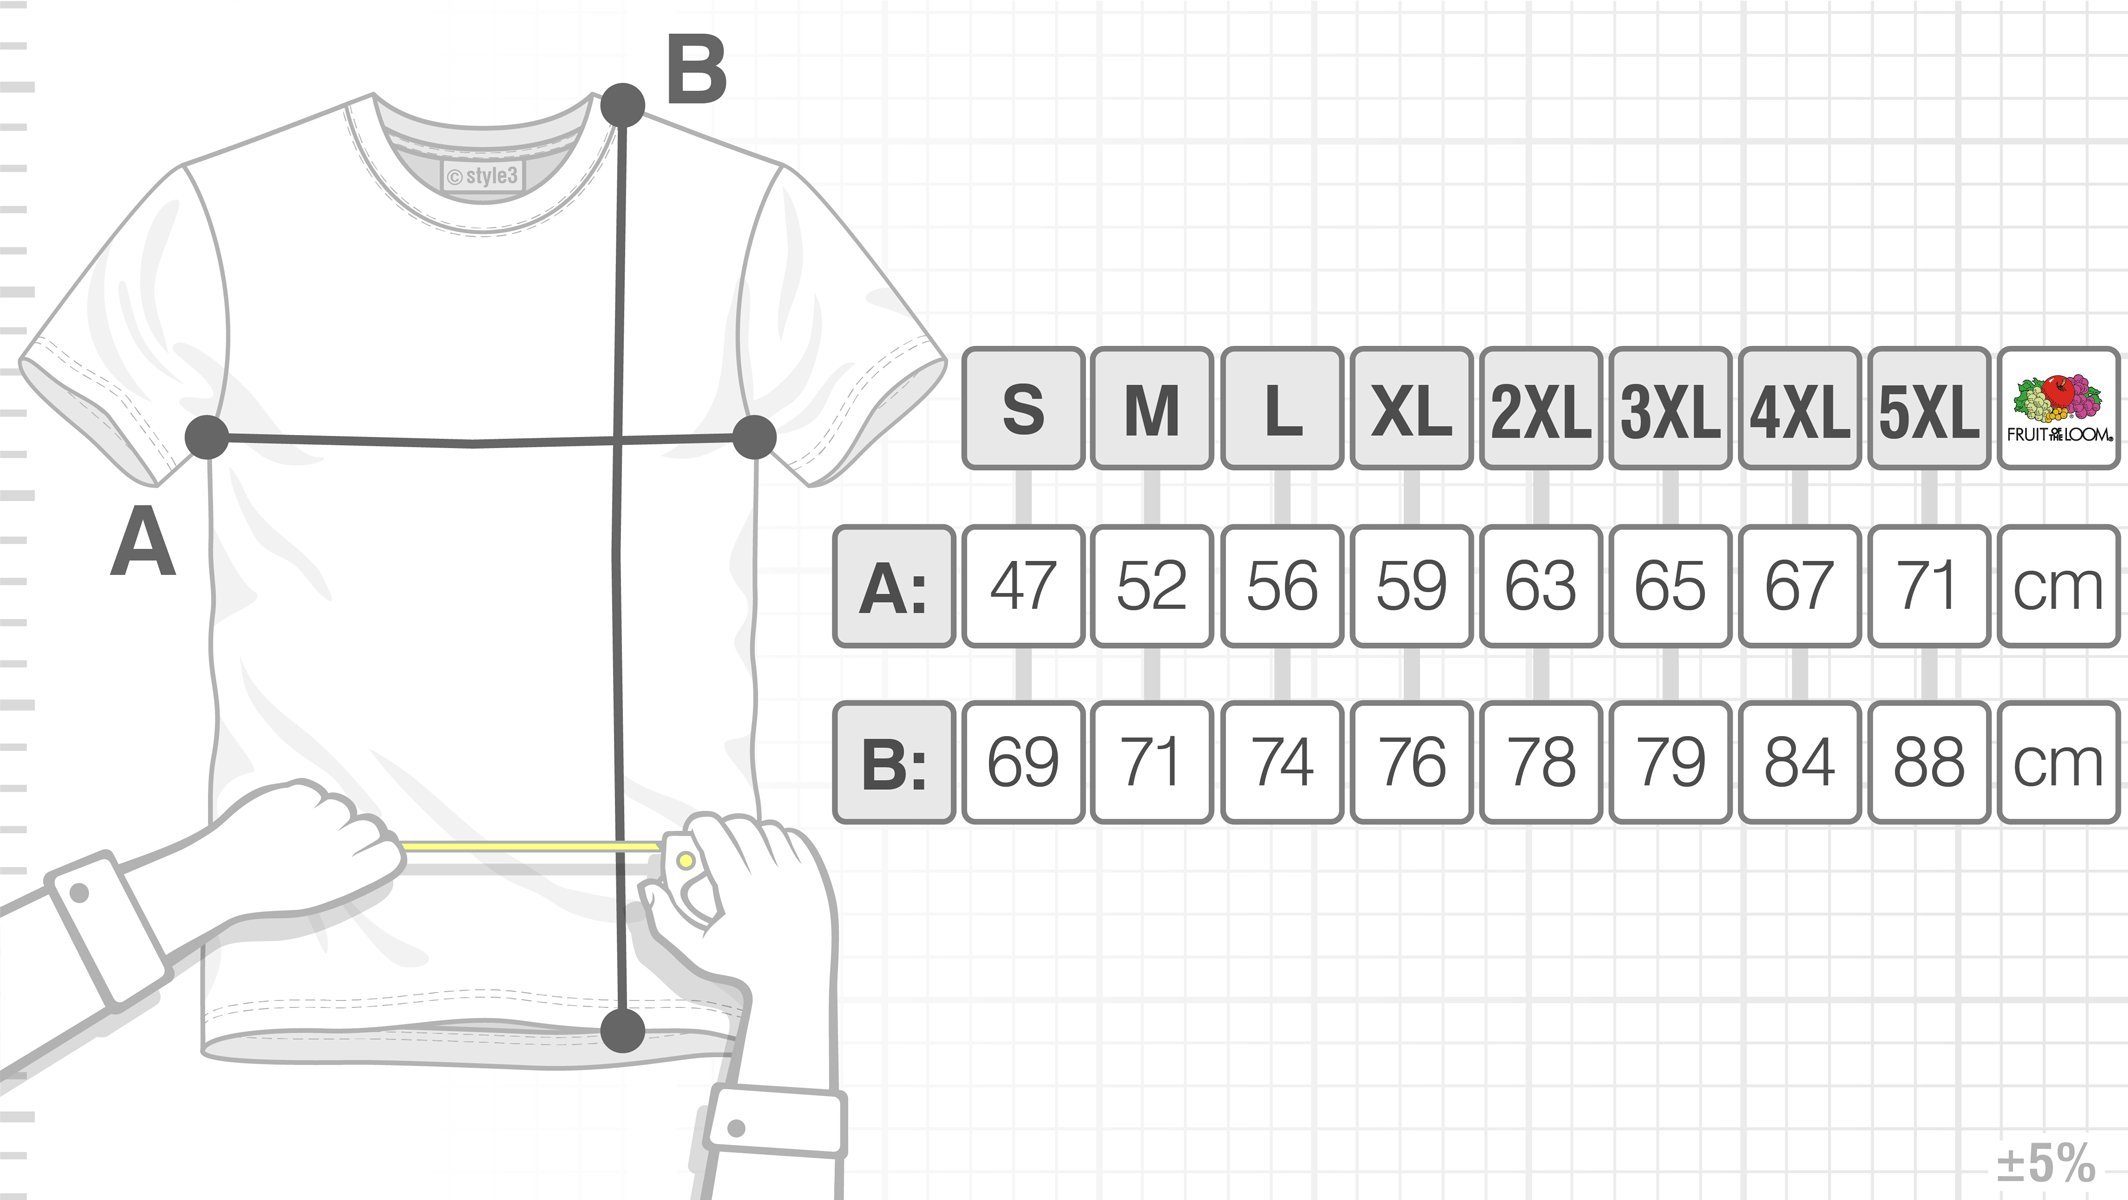 style3 Print-Shirt Herren Gamer Pixel T-Shirt is weiß Boy Spiel Konsole zelda mario a Jungen Life Game